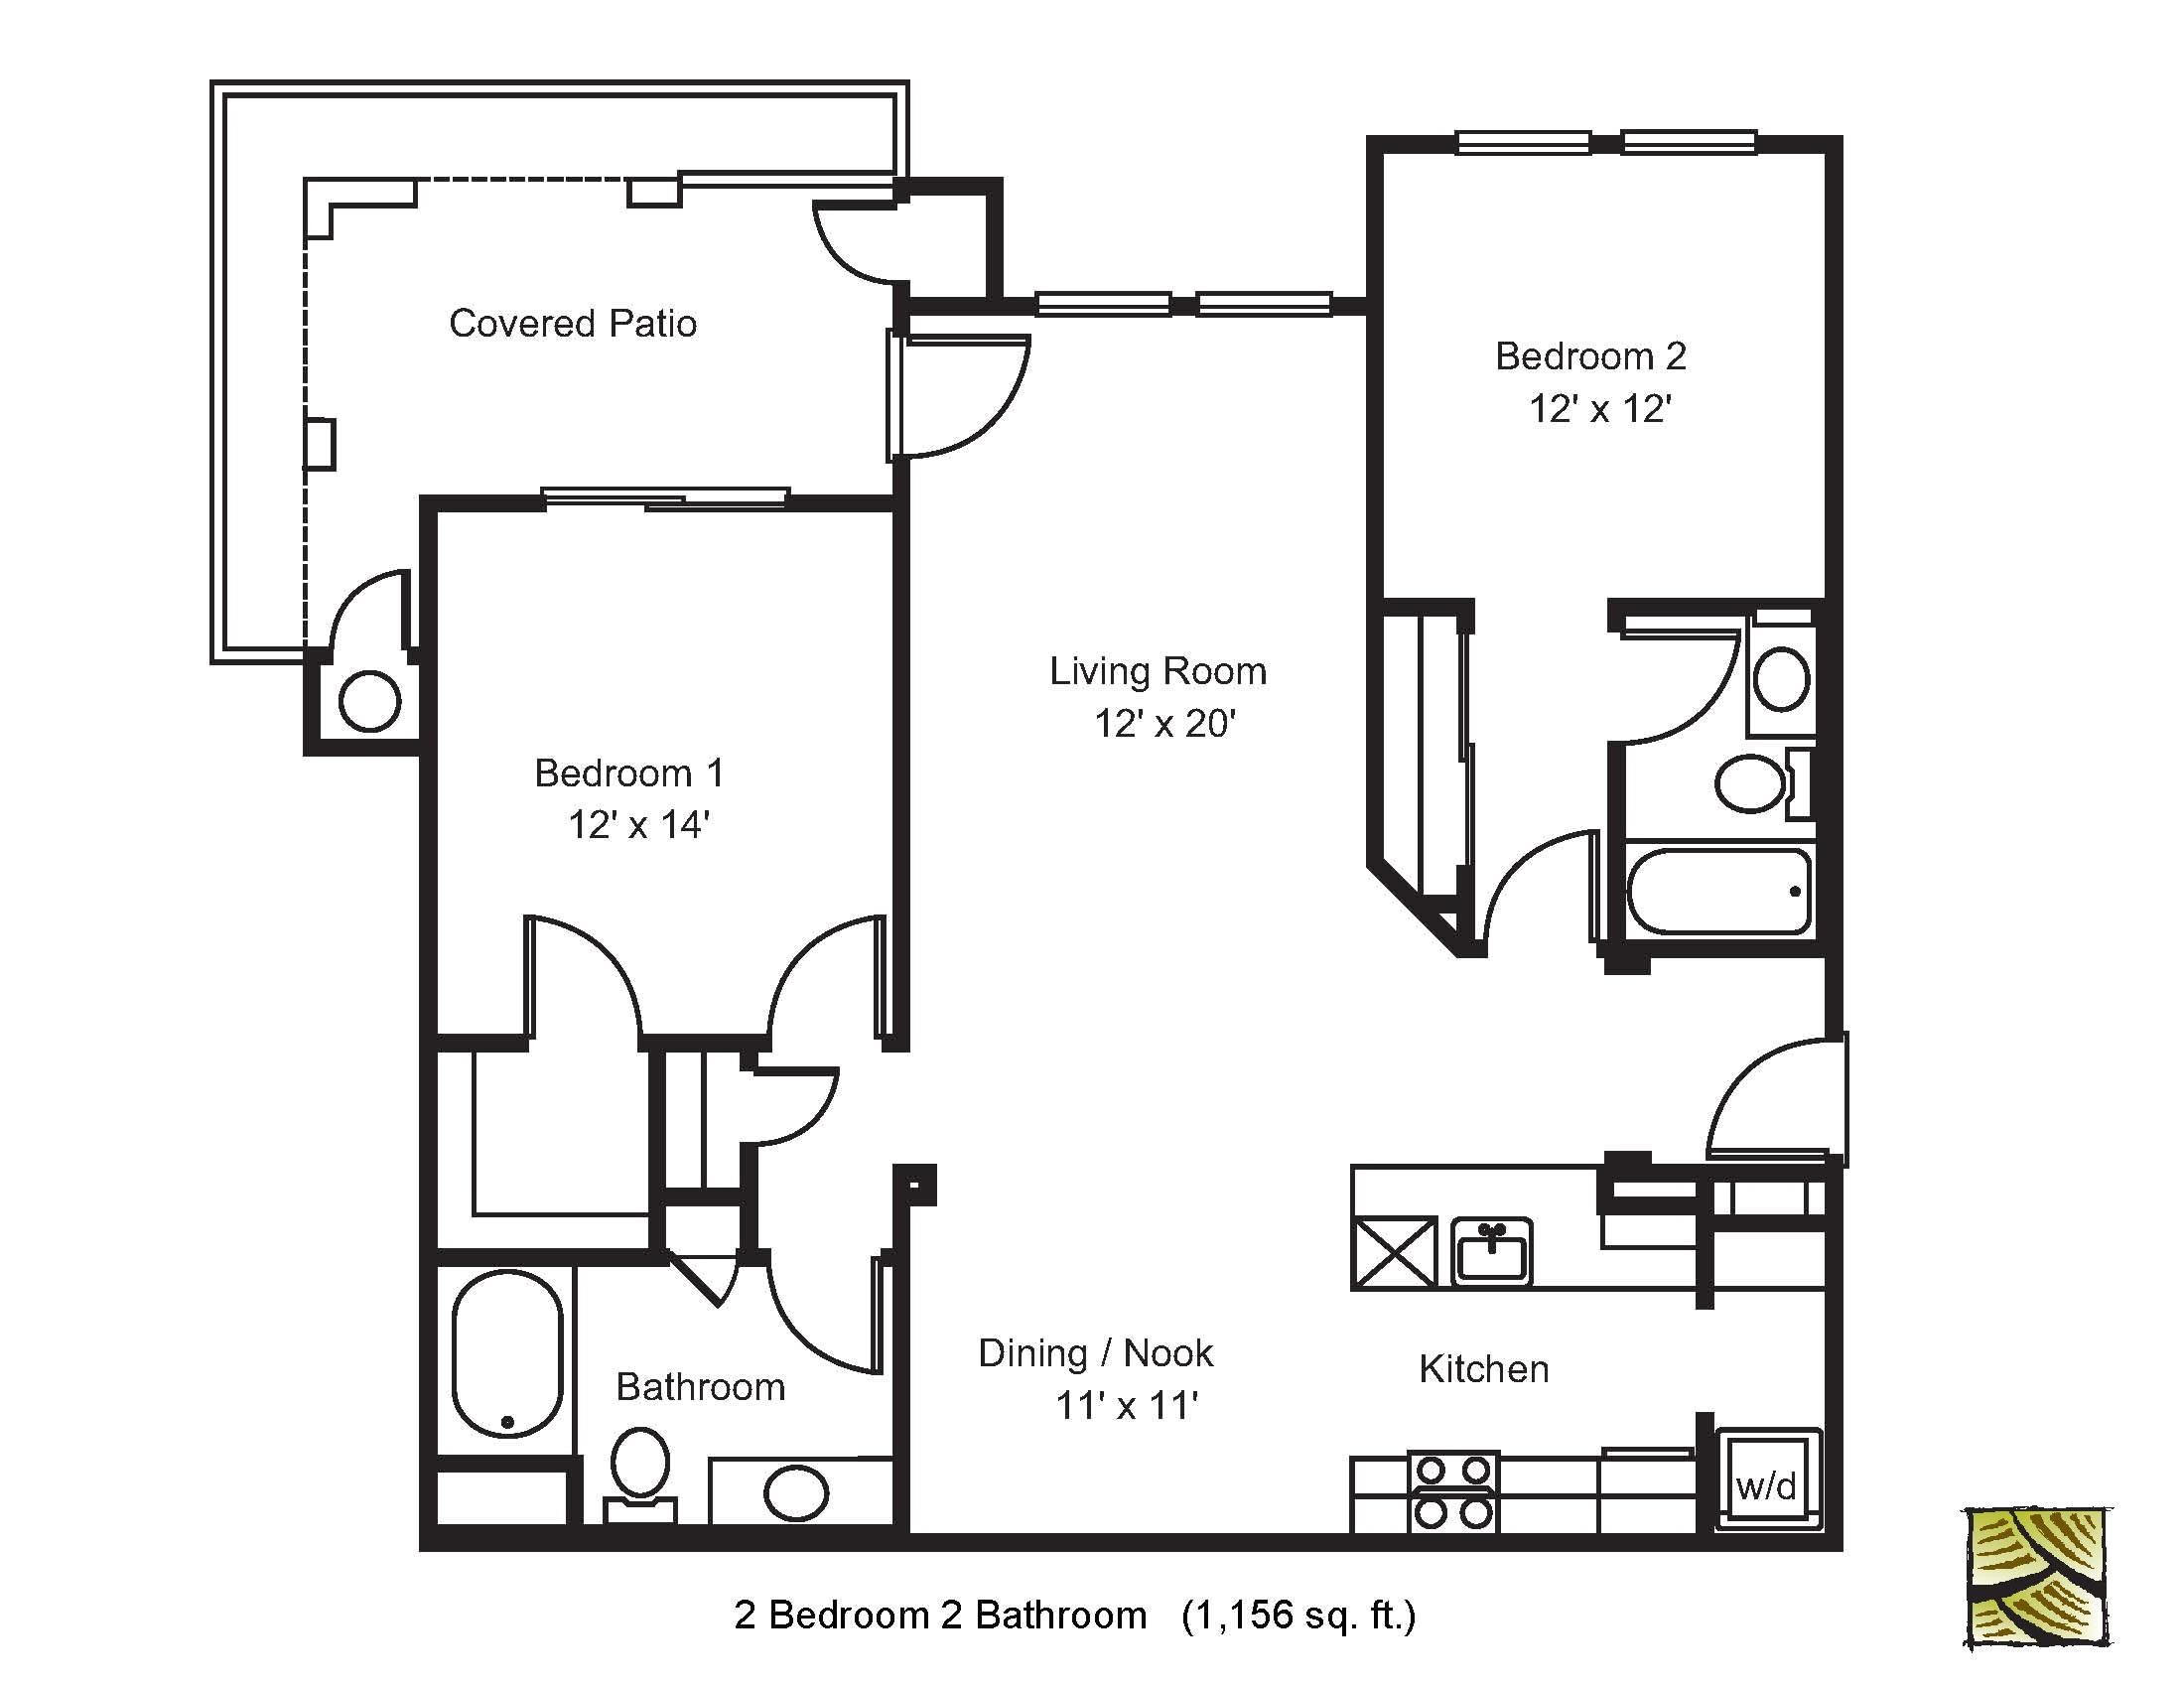 Make A House Floor Plan Online Free Design Ideas An Easy Free software Online Floor Plan